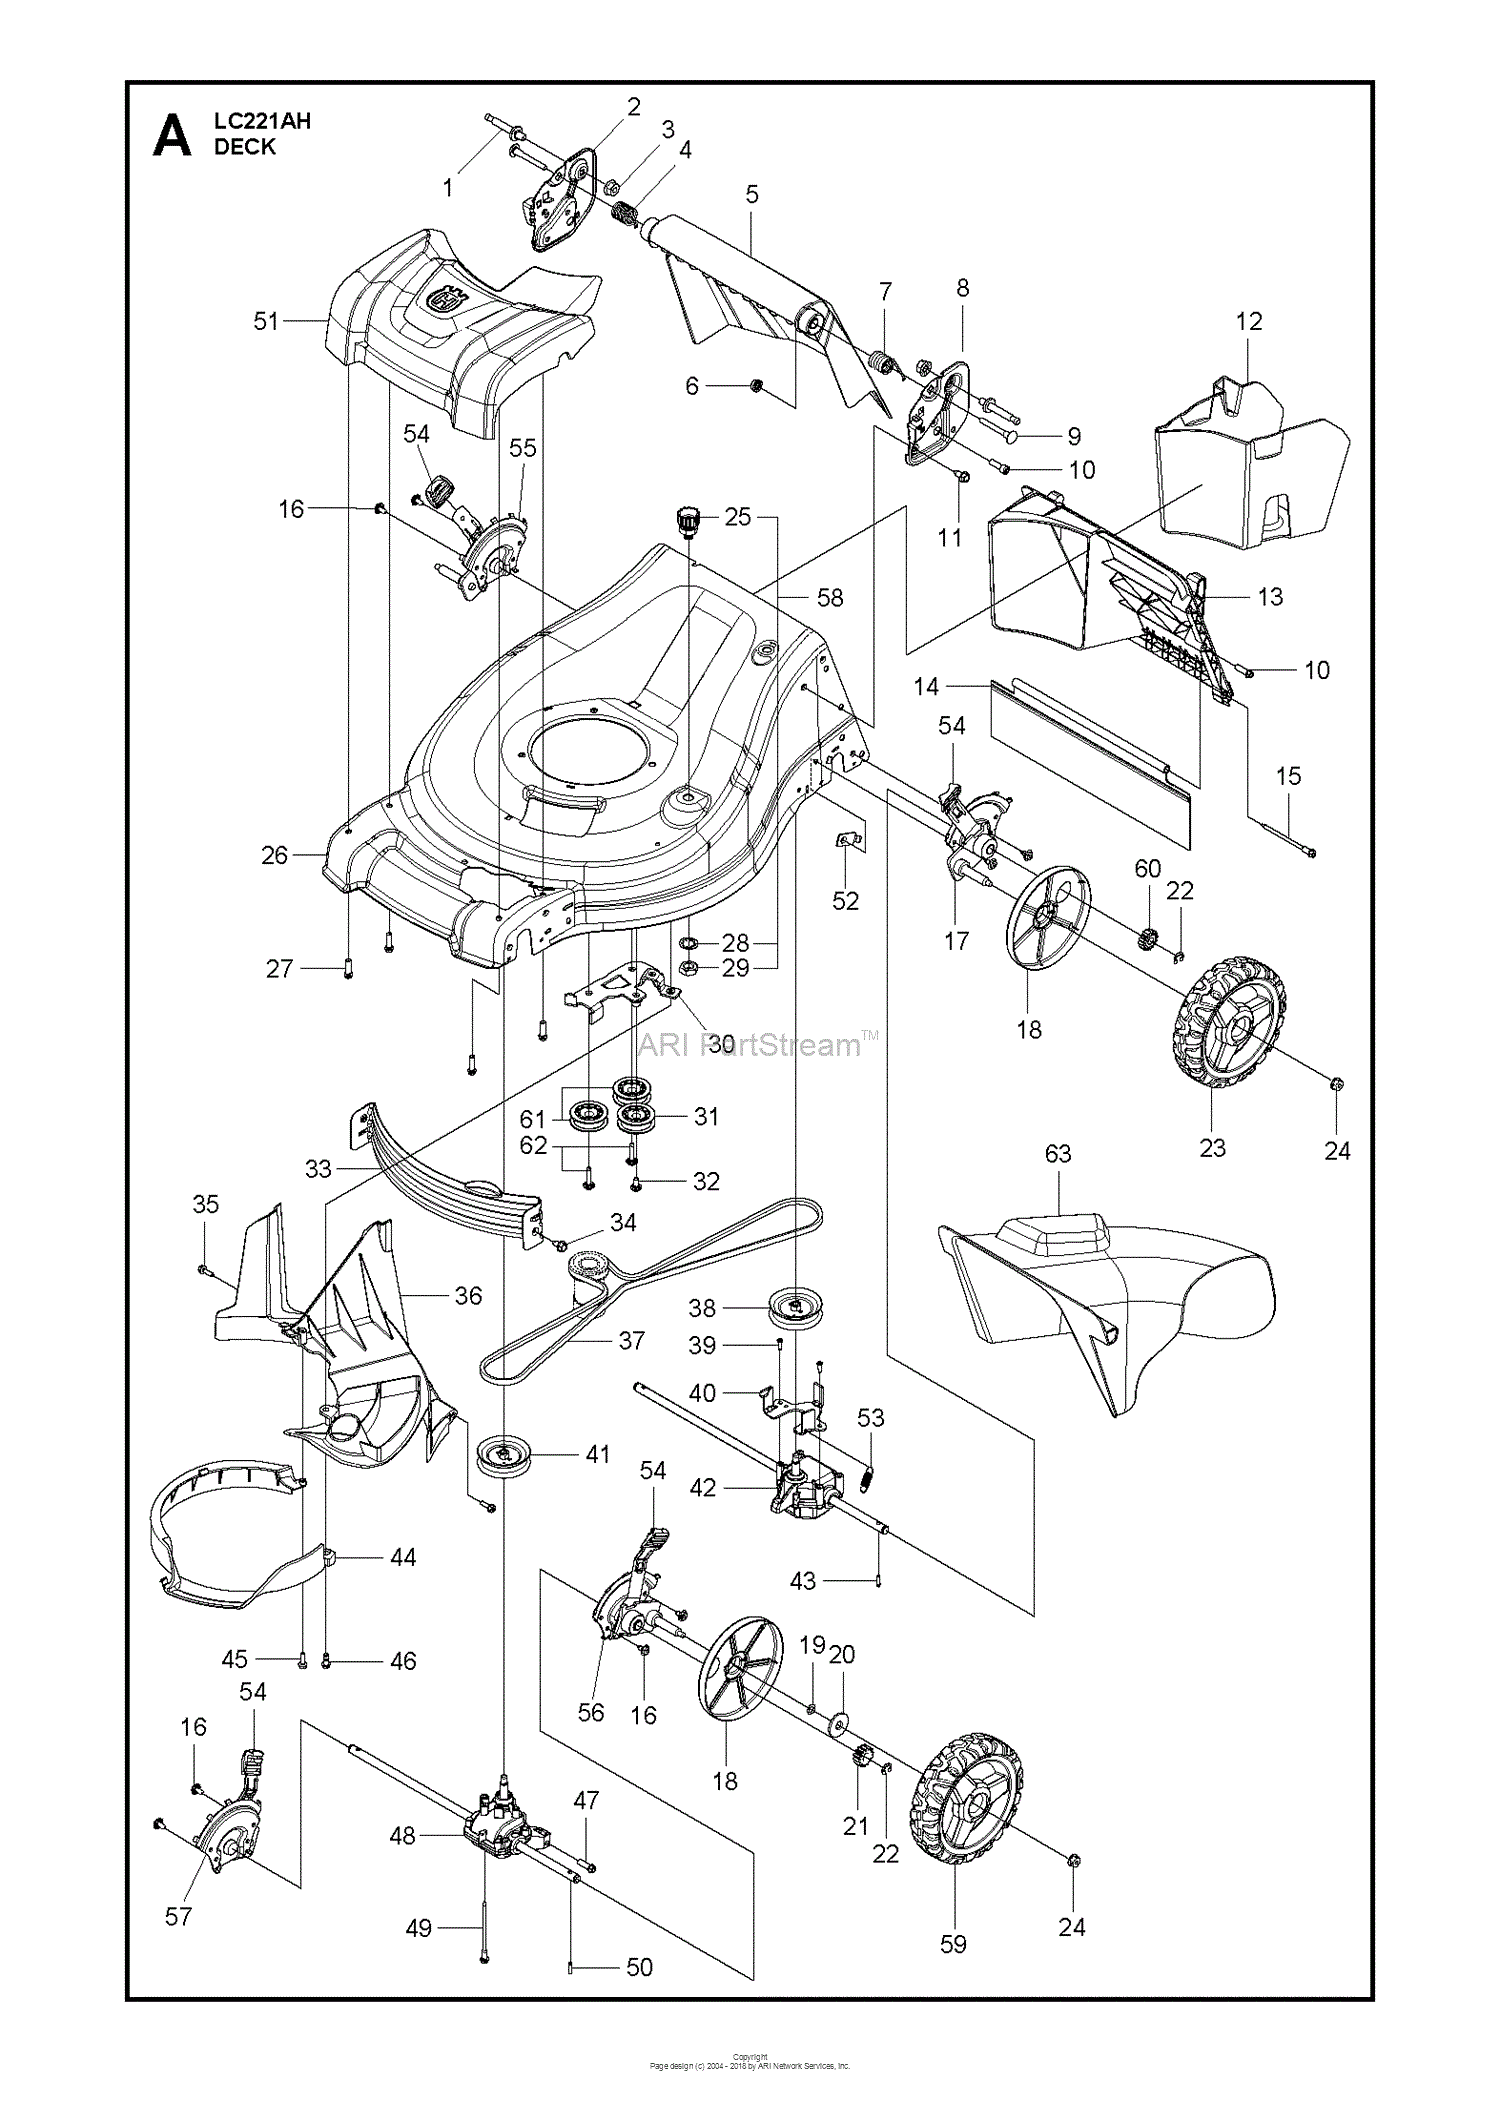 Husqvarna Lawn Mower Parts Diagram Free Wiring Diagram